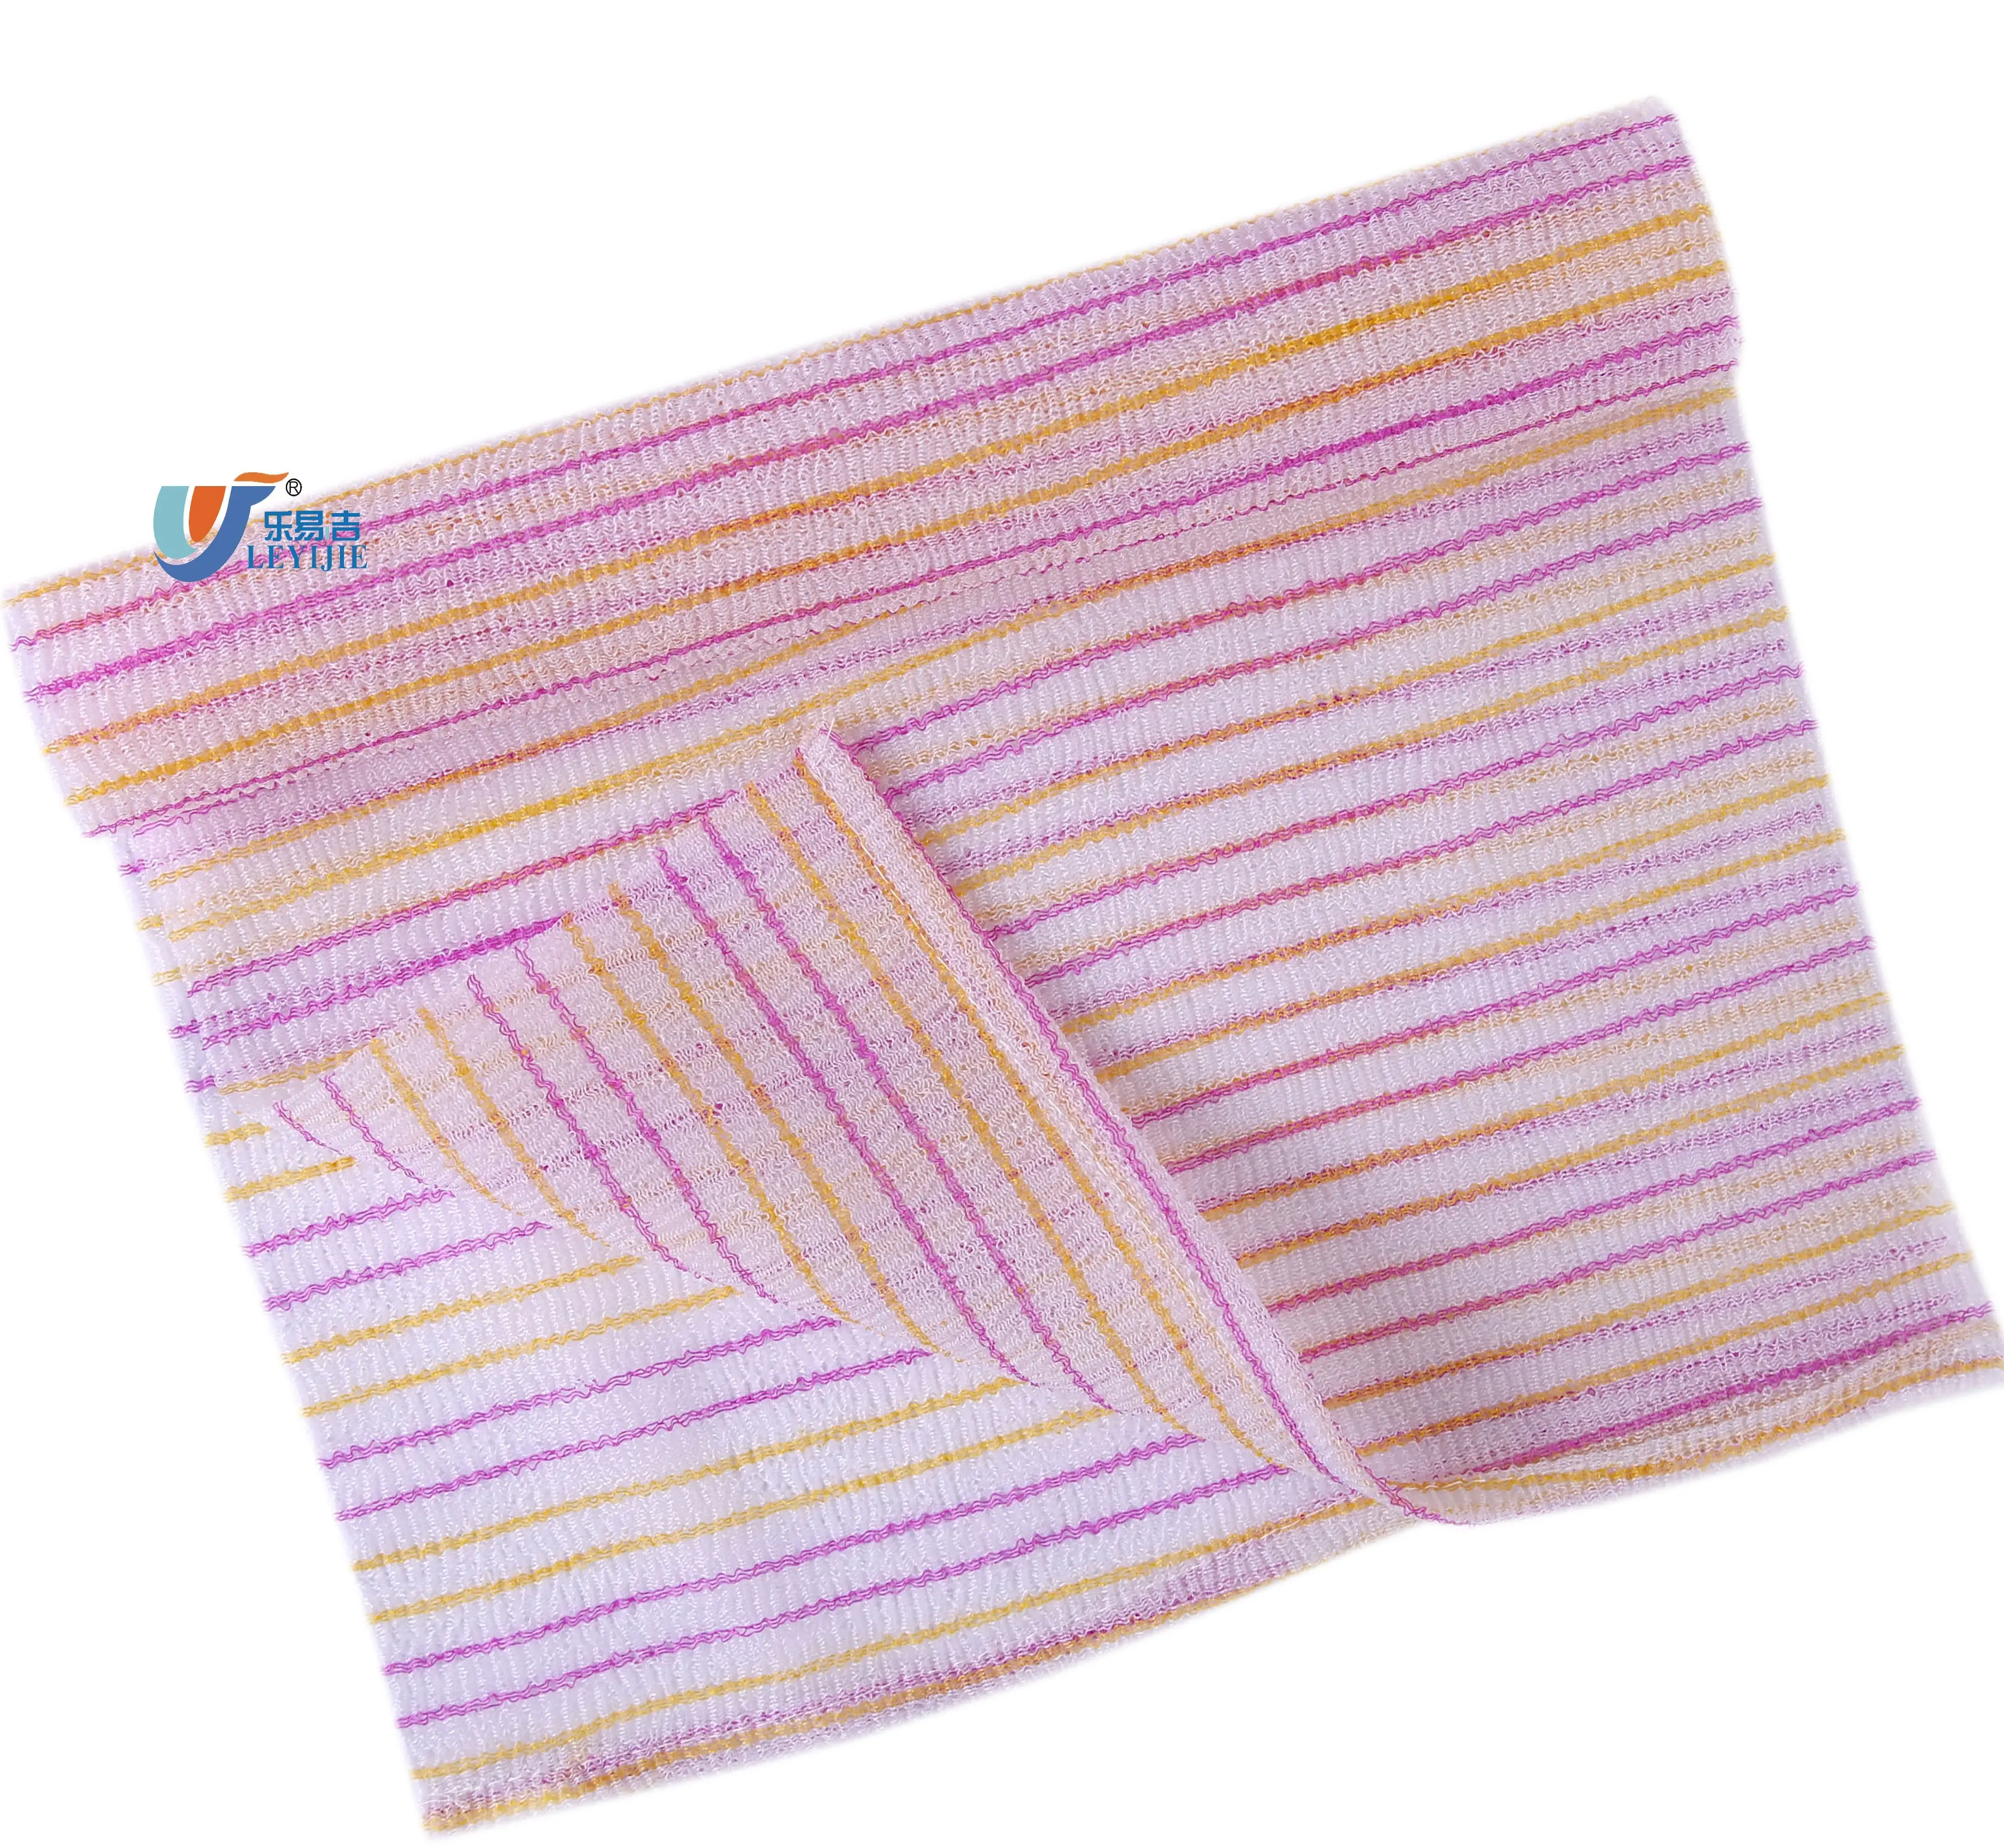 Yard Dyed Stripe 100% Nylon Bath Towel Spa Shower Hotel Disposable Sauna Bath Towels